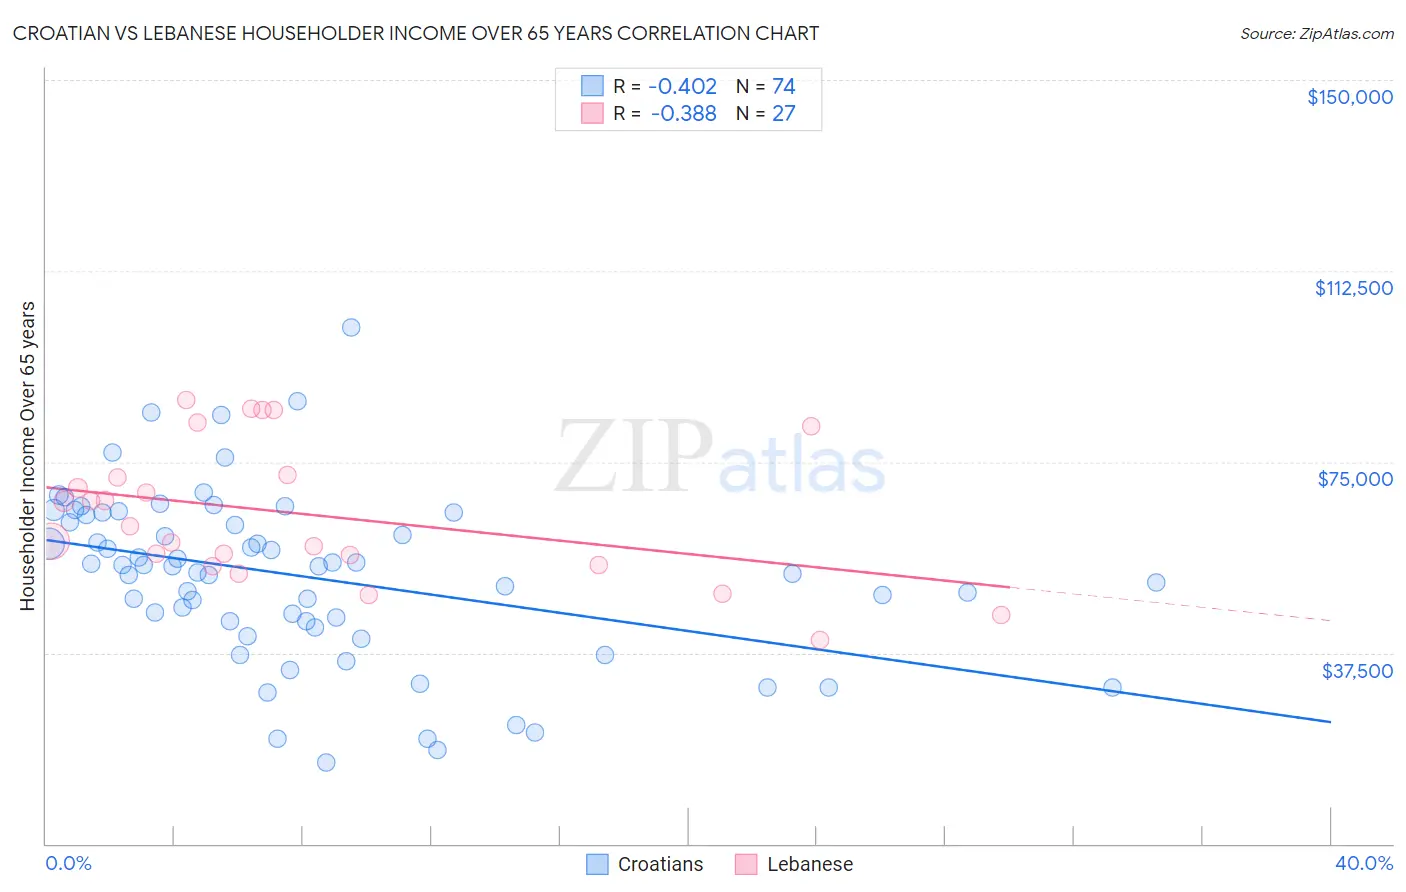 Croatian vs Lebanese Householder Income Over 65 years